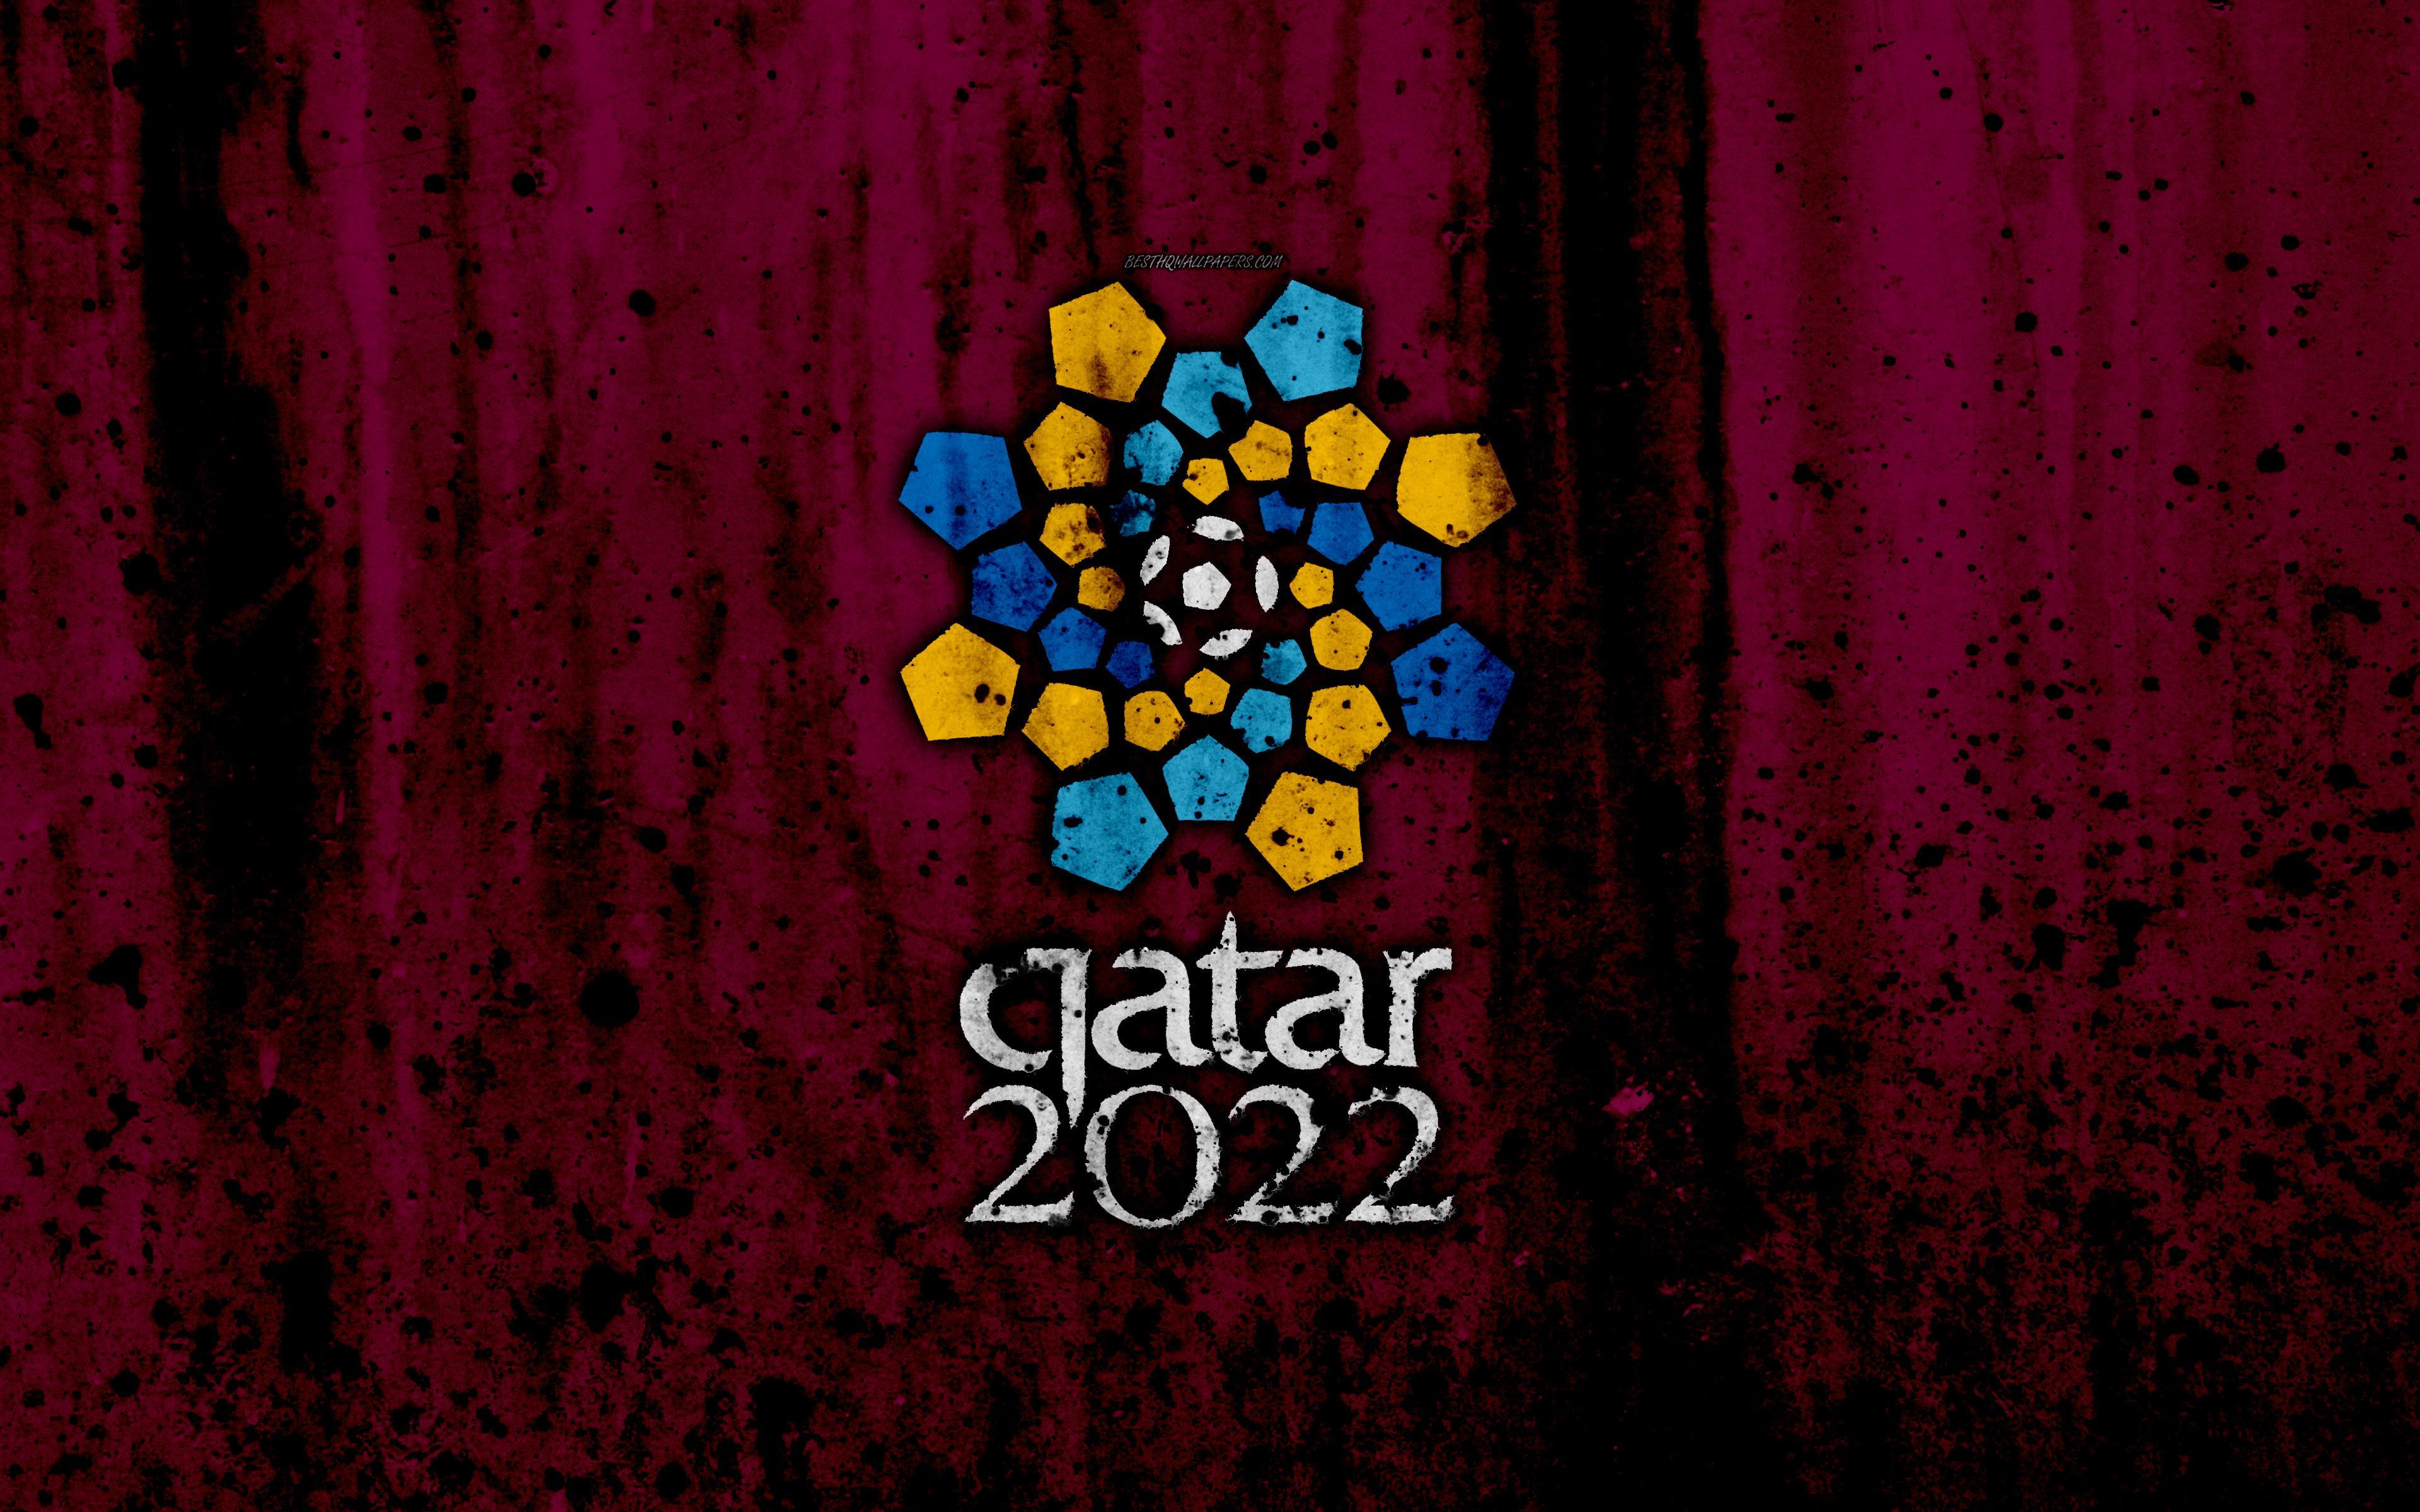 Download wallpaper Qatar 2022 FIFA World Cup, 4k, logo, grunge